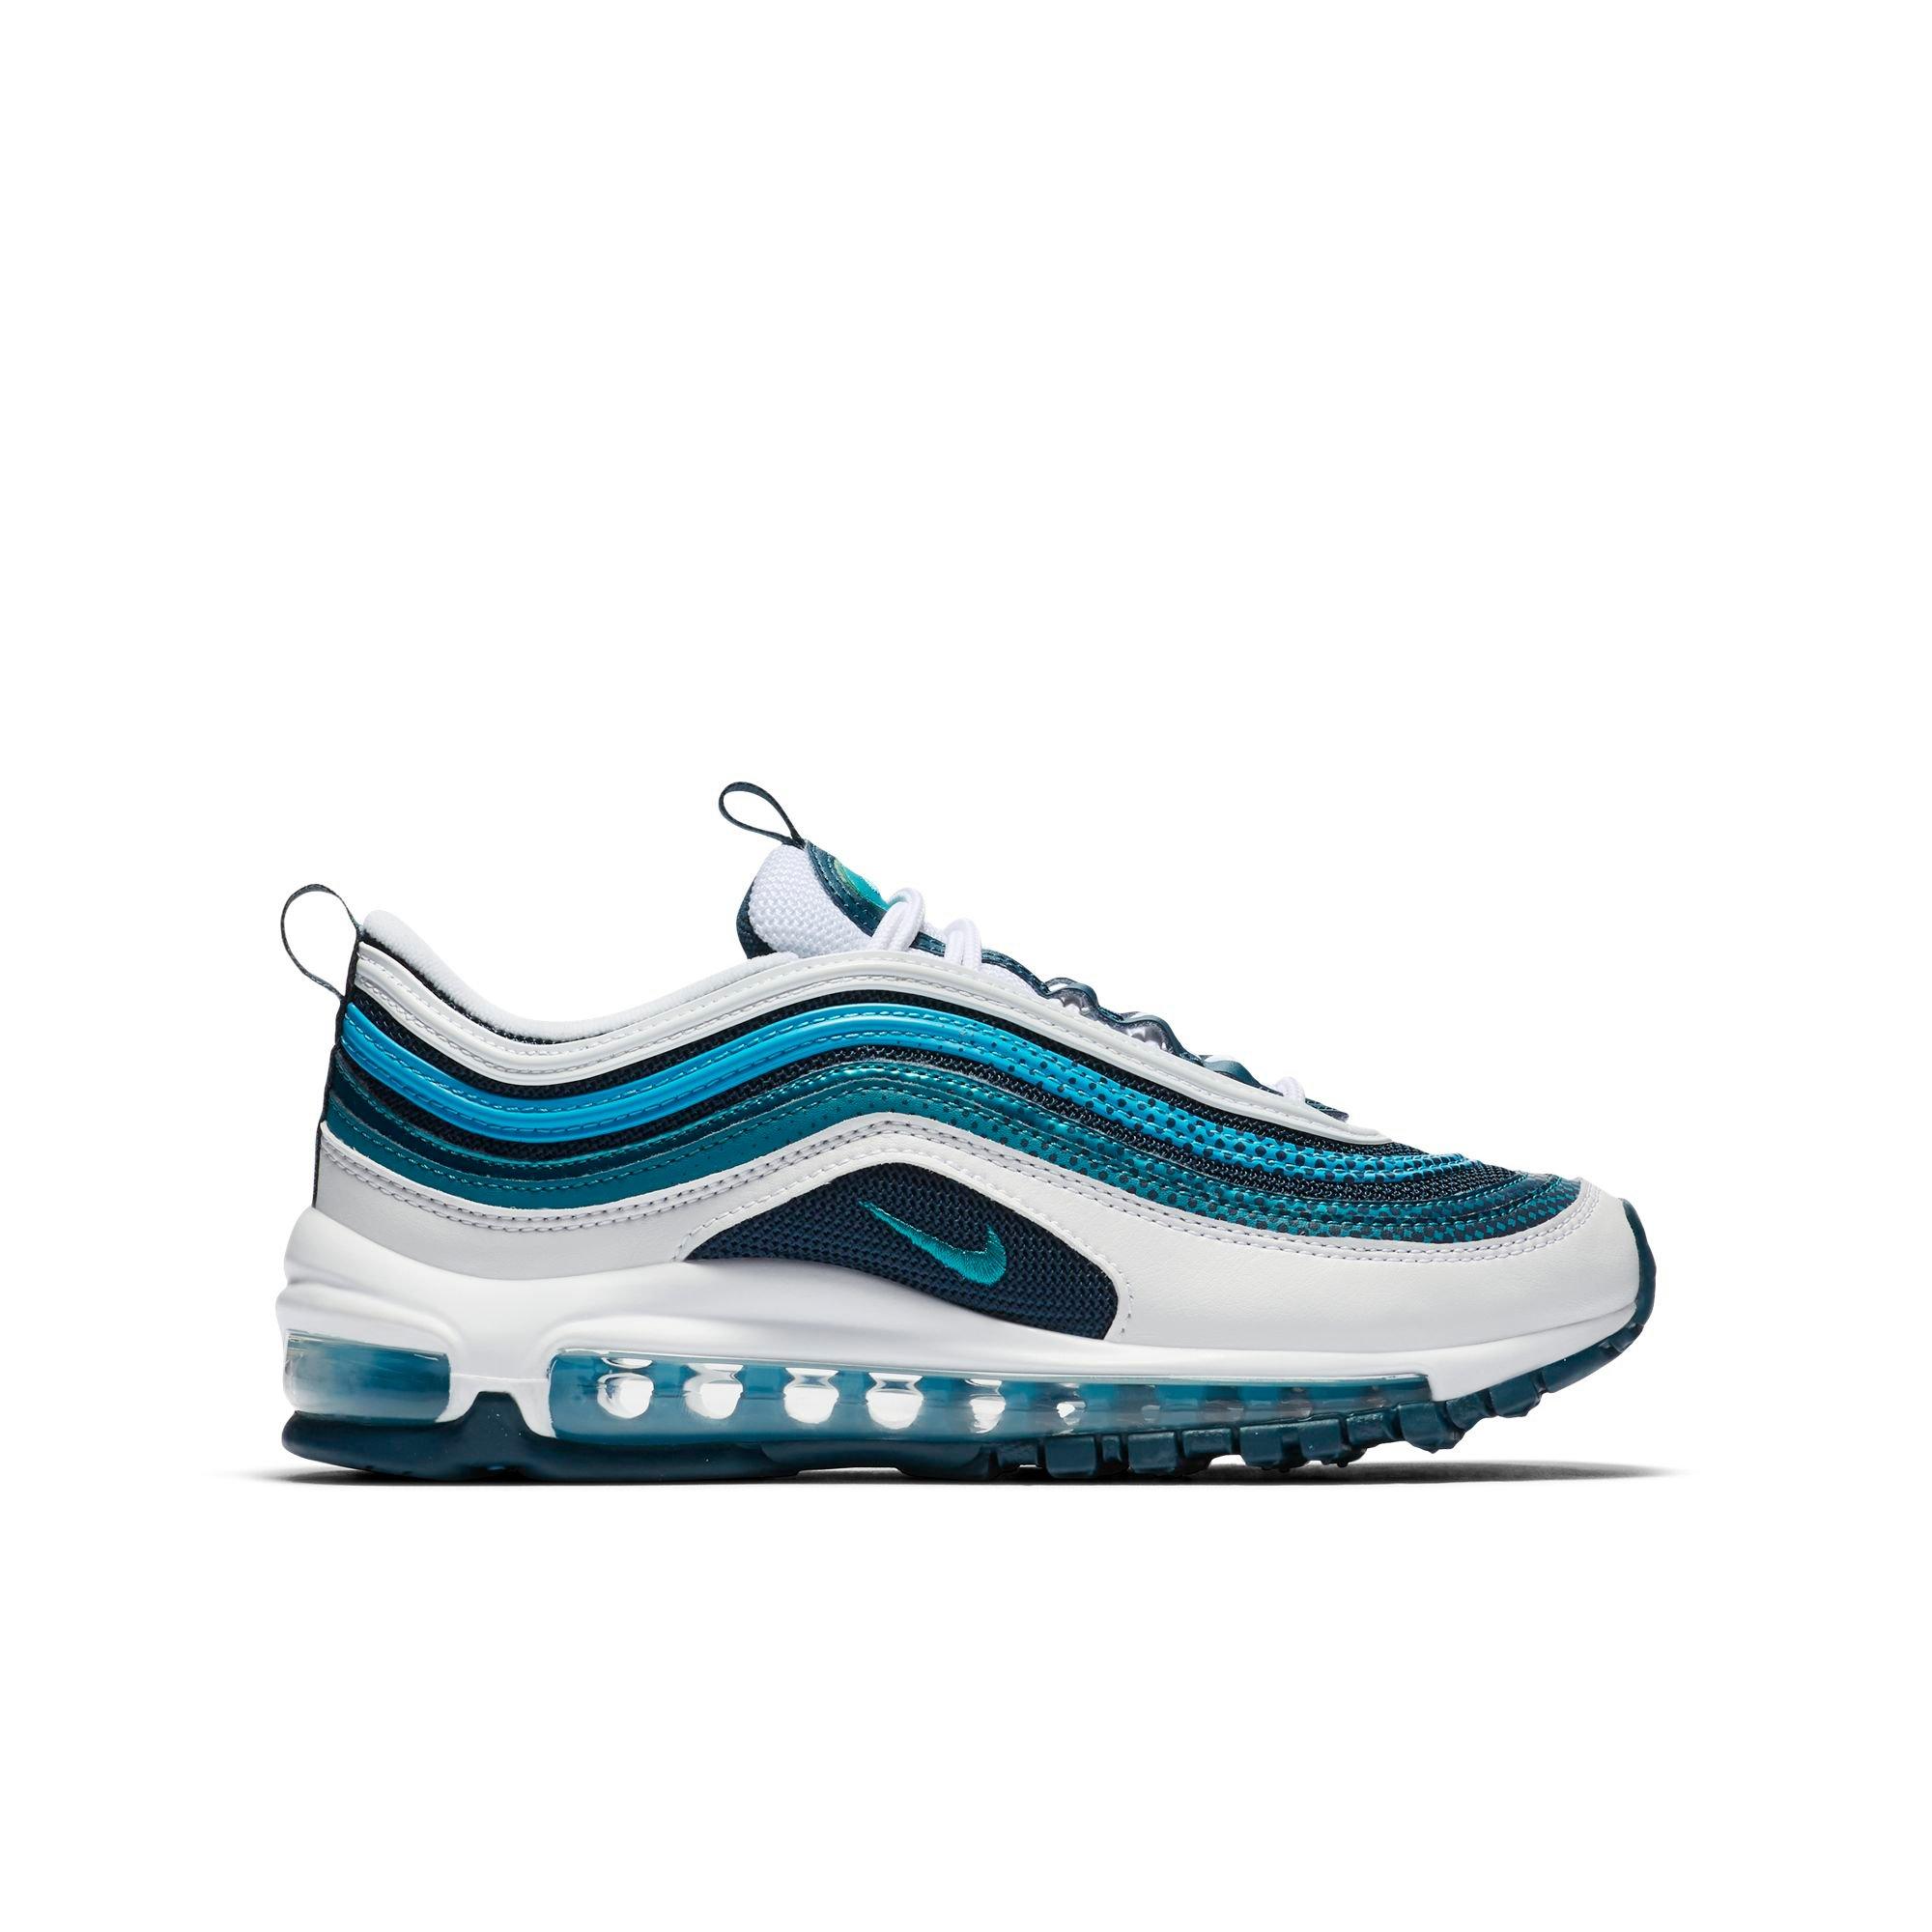 Sneaker Release: Nike Air Max 97 “White 